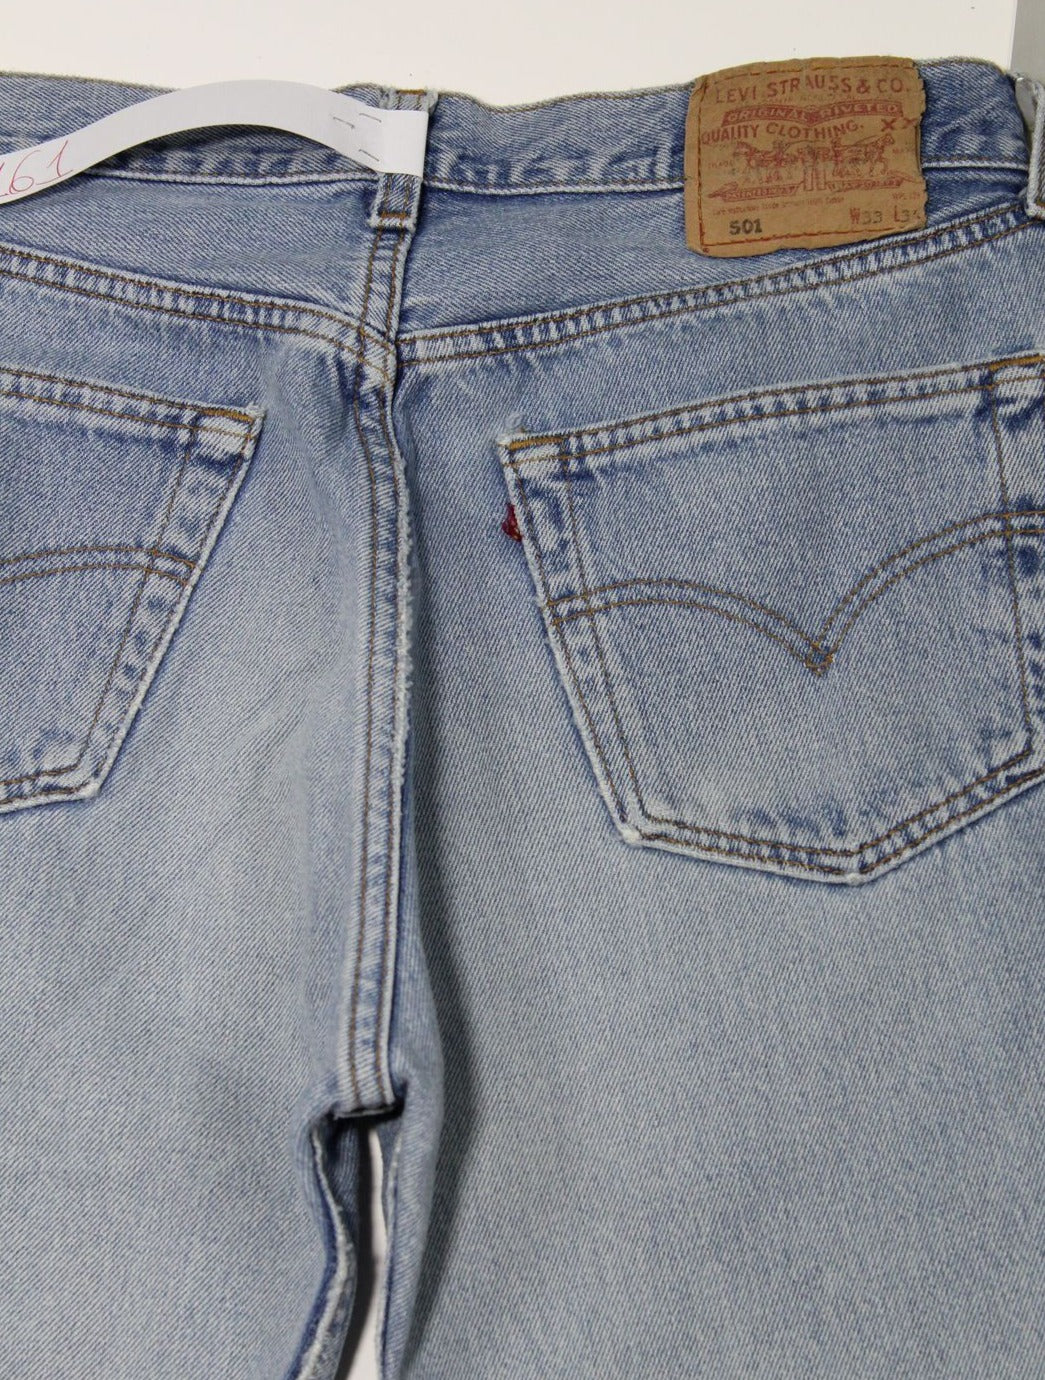 Levi's 501 Denim W33 L34 Made In USA Jeans Vintage